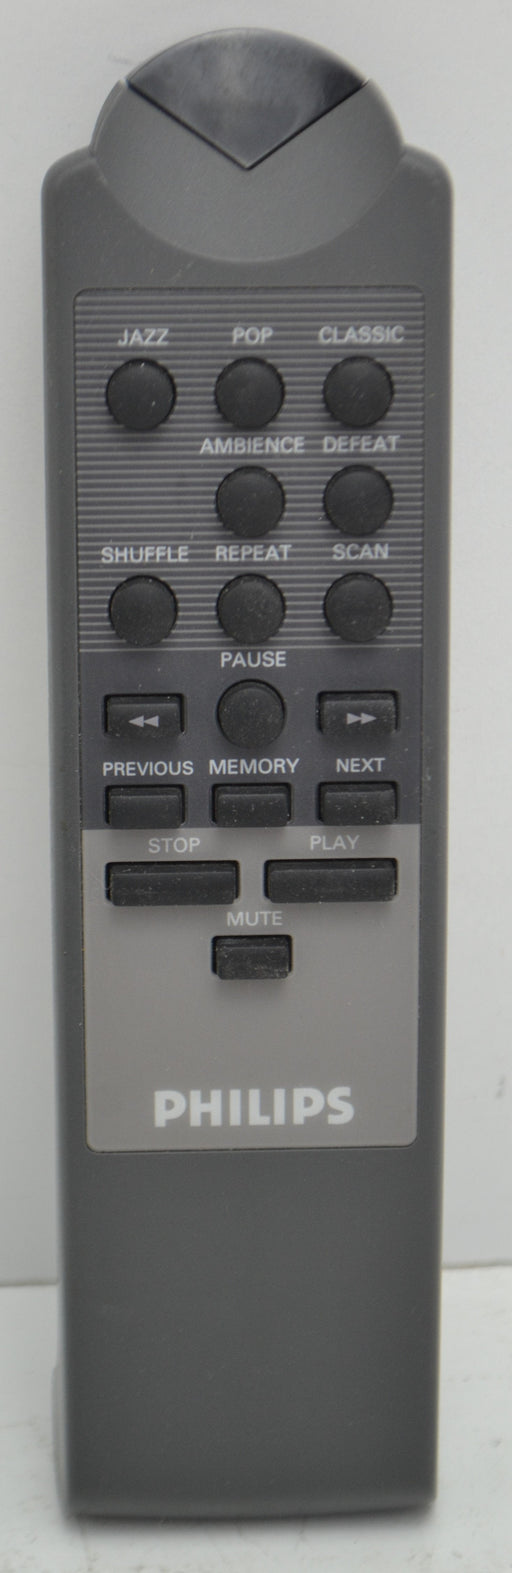 Philips - SV206 6833/01 - System Remote Control - Jazz Pop Classic-Remote-SpenCertified-refurbished-vintage-electonics